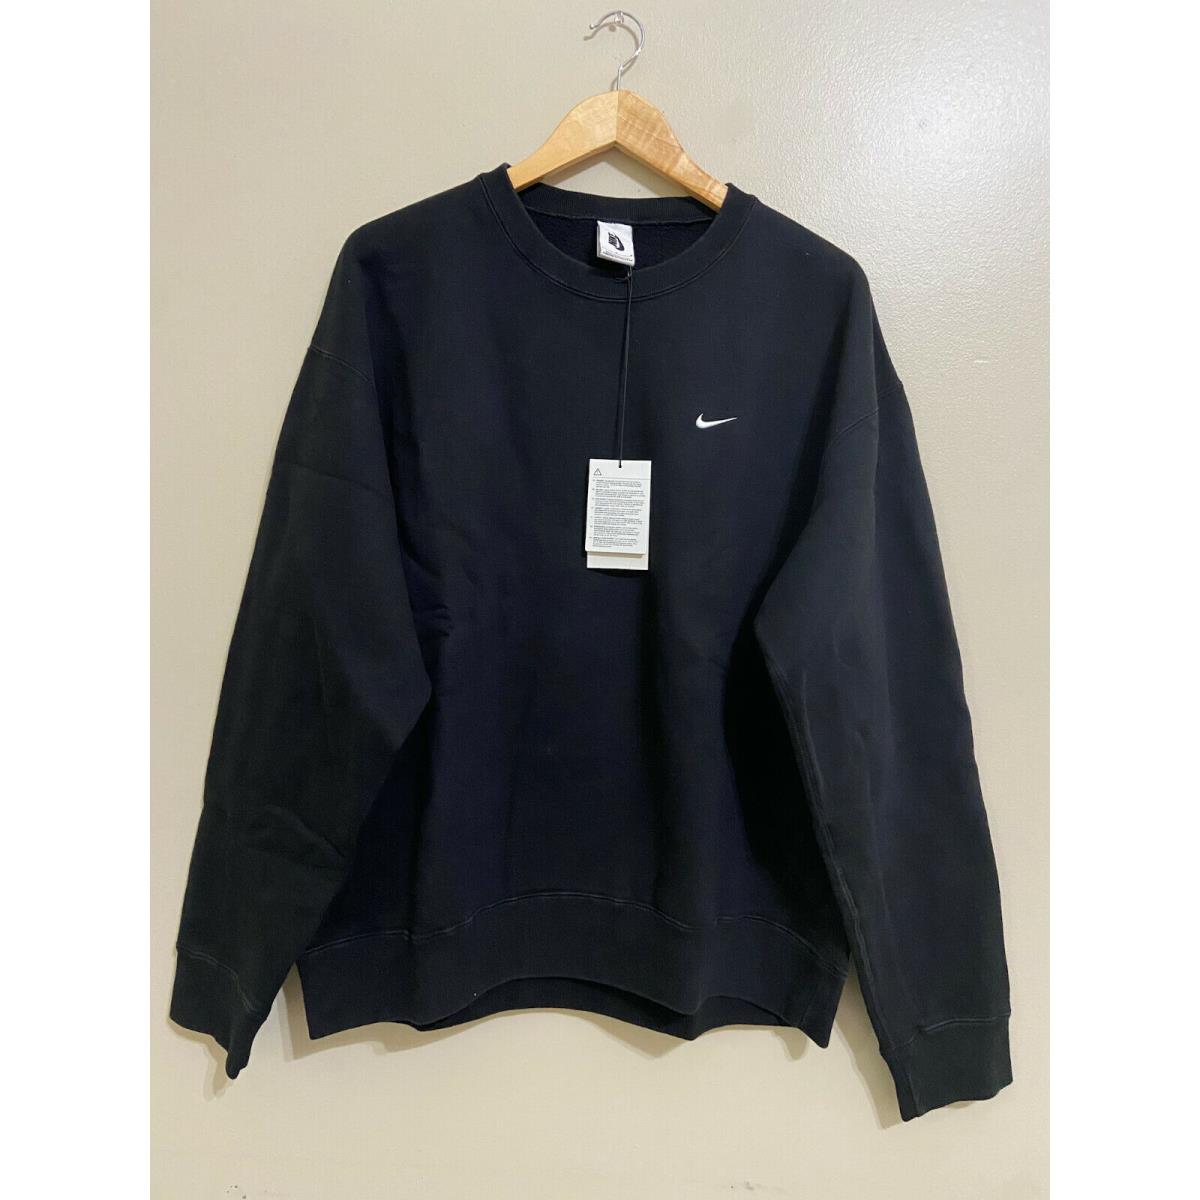 Nikelab Nrg Crew Neck Fleece Pullover Sweater Sweatshirt Black Mens L CZ5353-010